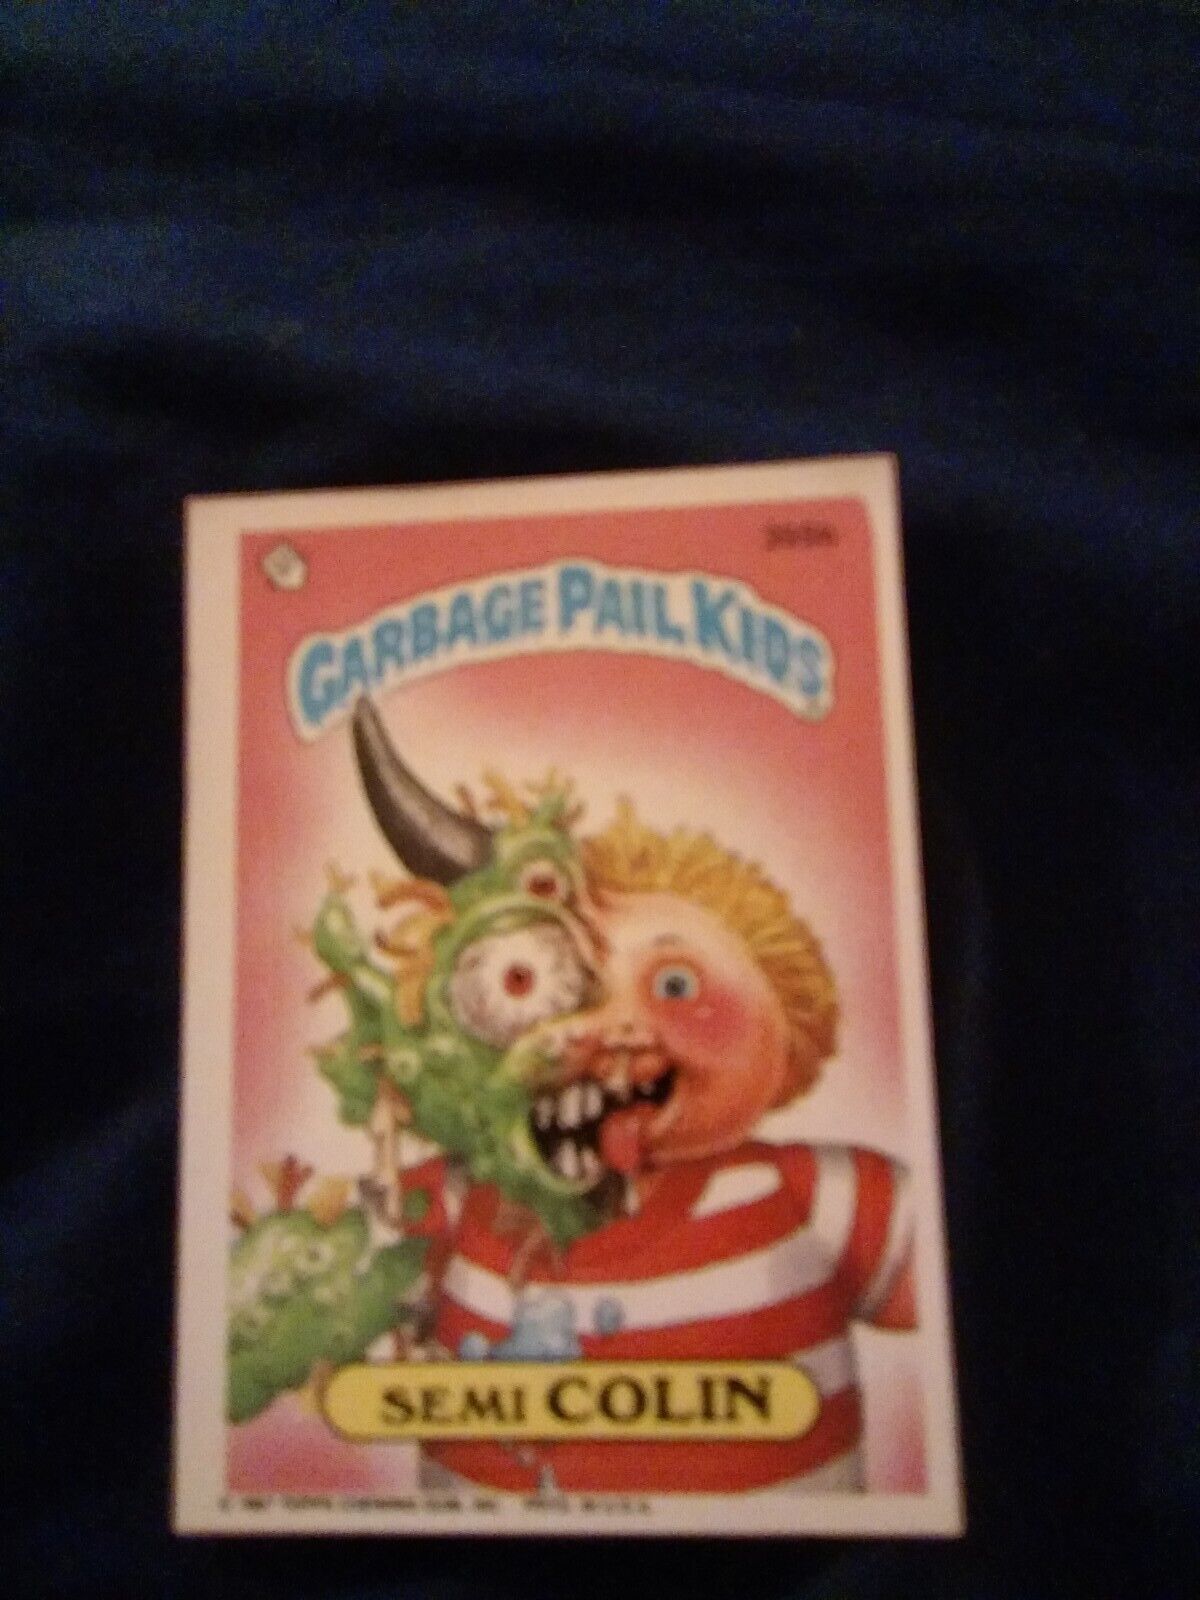 1987 Topps Garbage Pail Kids 9th Series 9 Card 355b Semi Colin Mint